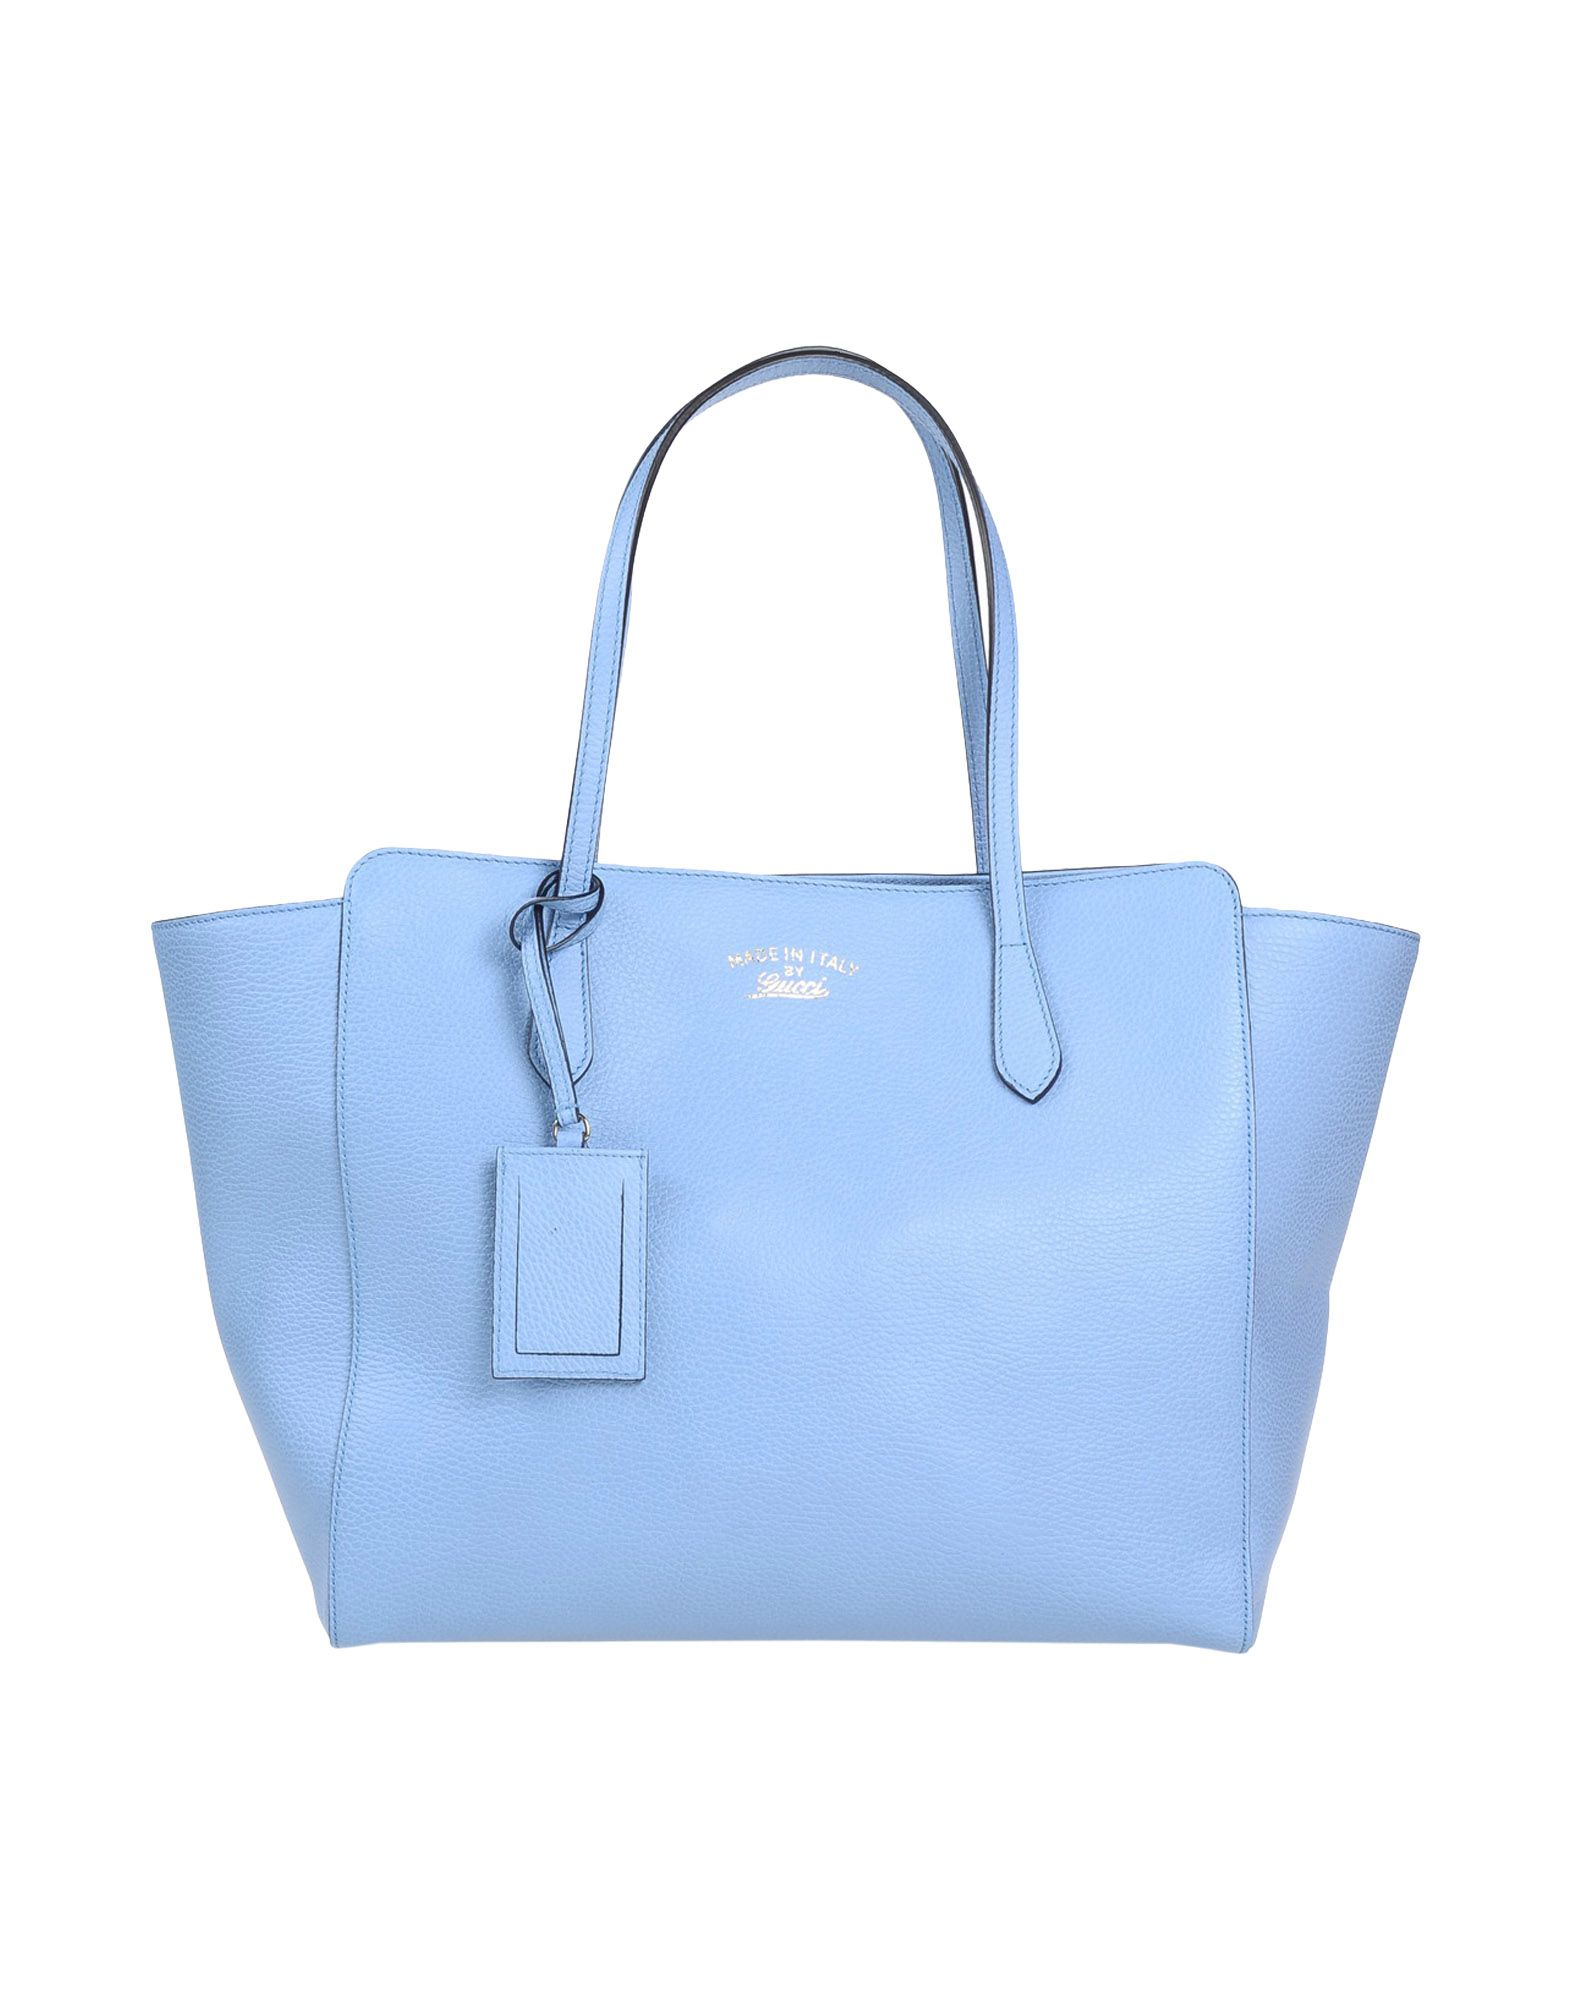 Gucci Handbag in Sky Blue (Blue) - Lyst